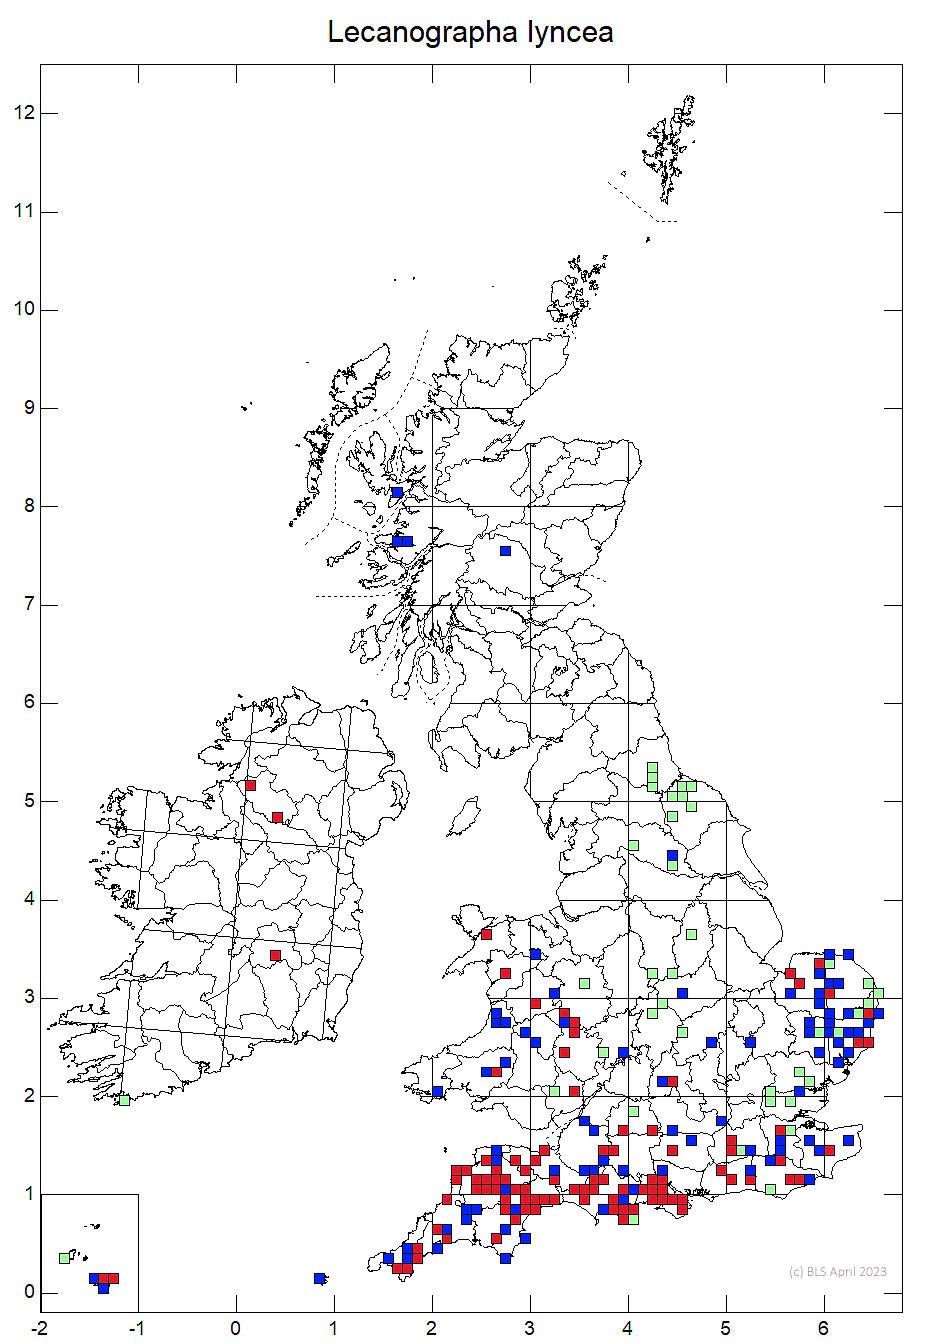 Lecanographa lyncea 10km sq distribution map